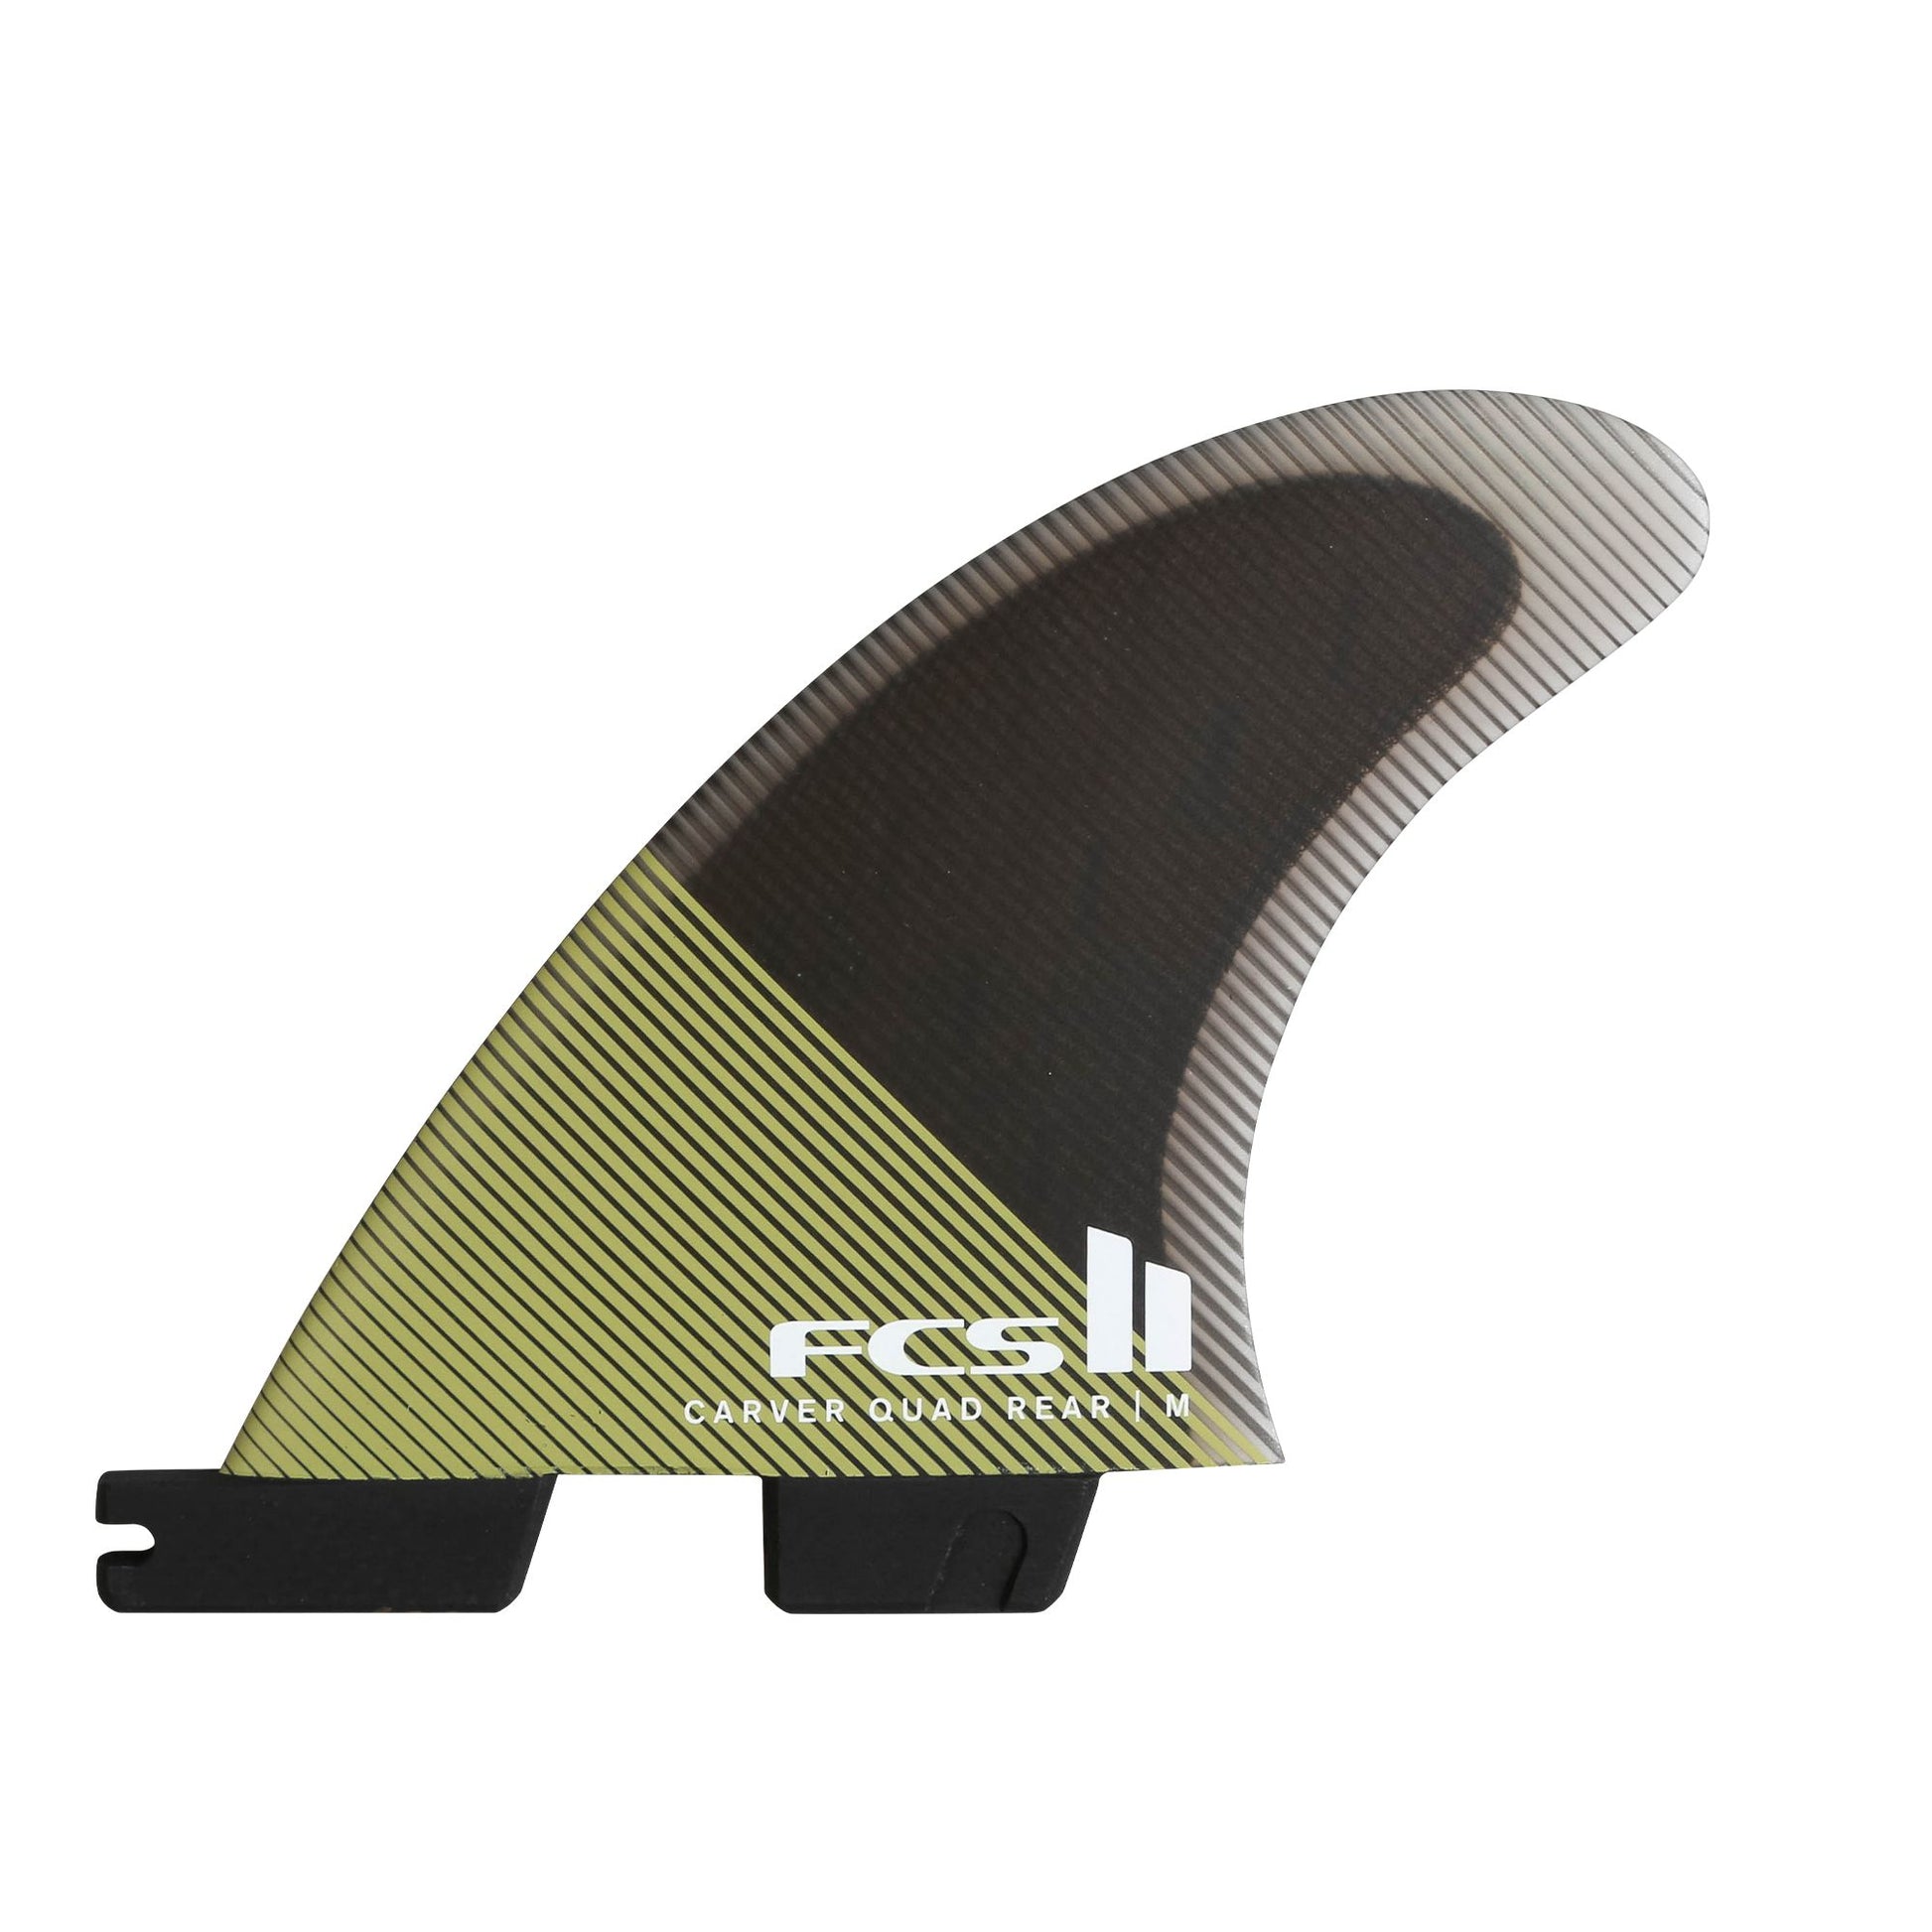 FCS II Carver PC Quad Rear Surfboard Fins - medium showing single side fin in eucalyptus colour